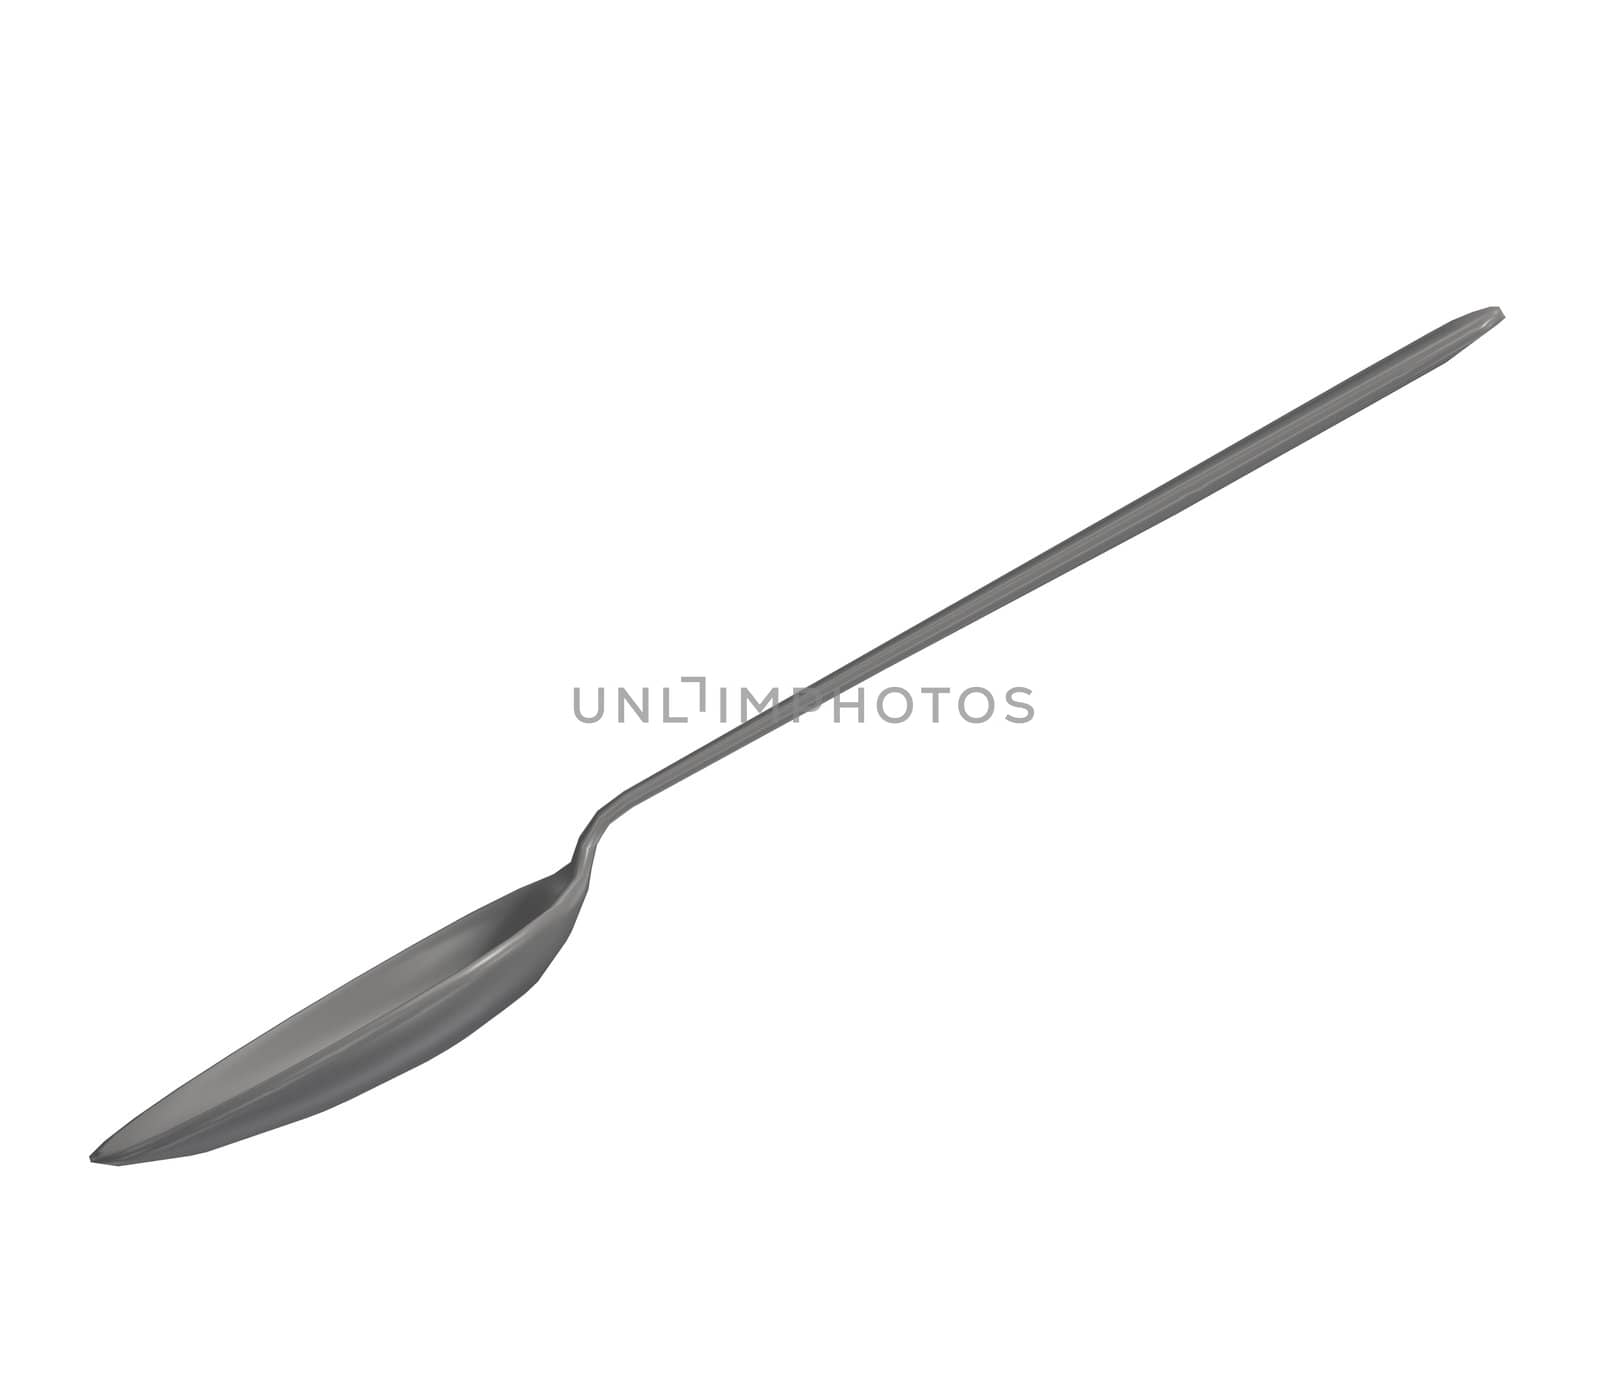 A Spoon by kathygold